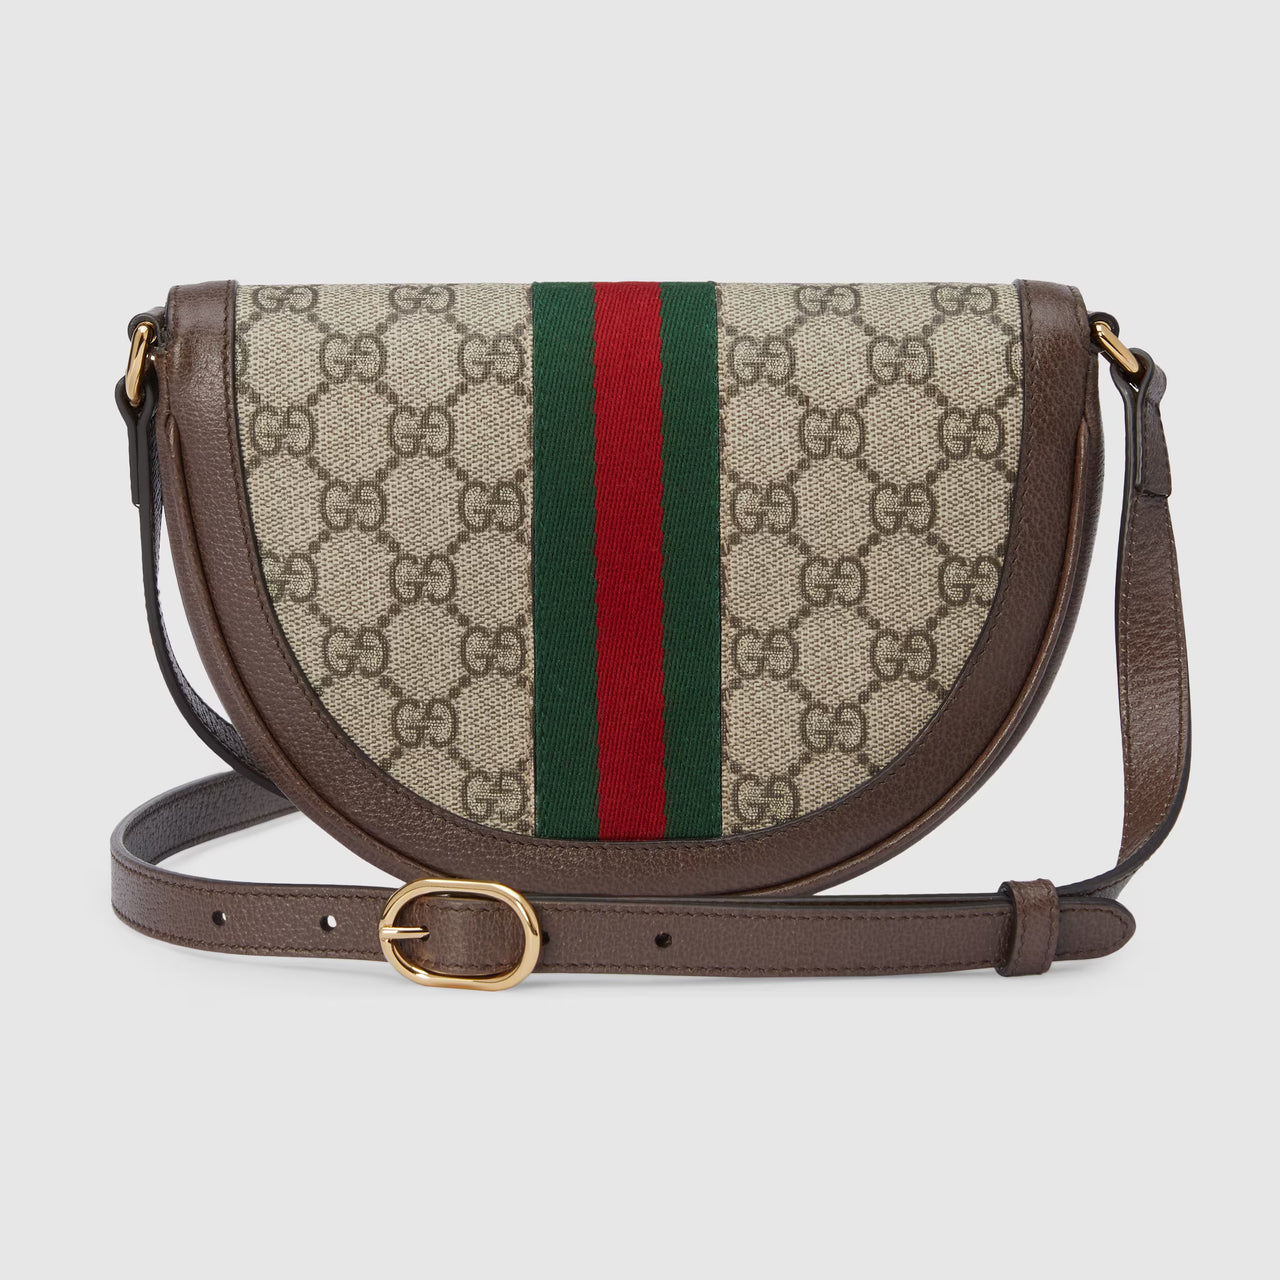 Gucci Ophidia Mini GG Shoulder Bag (Beige & Ebony)